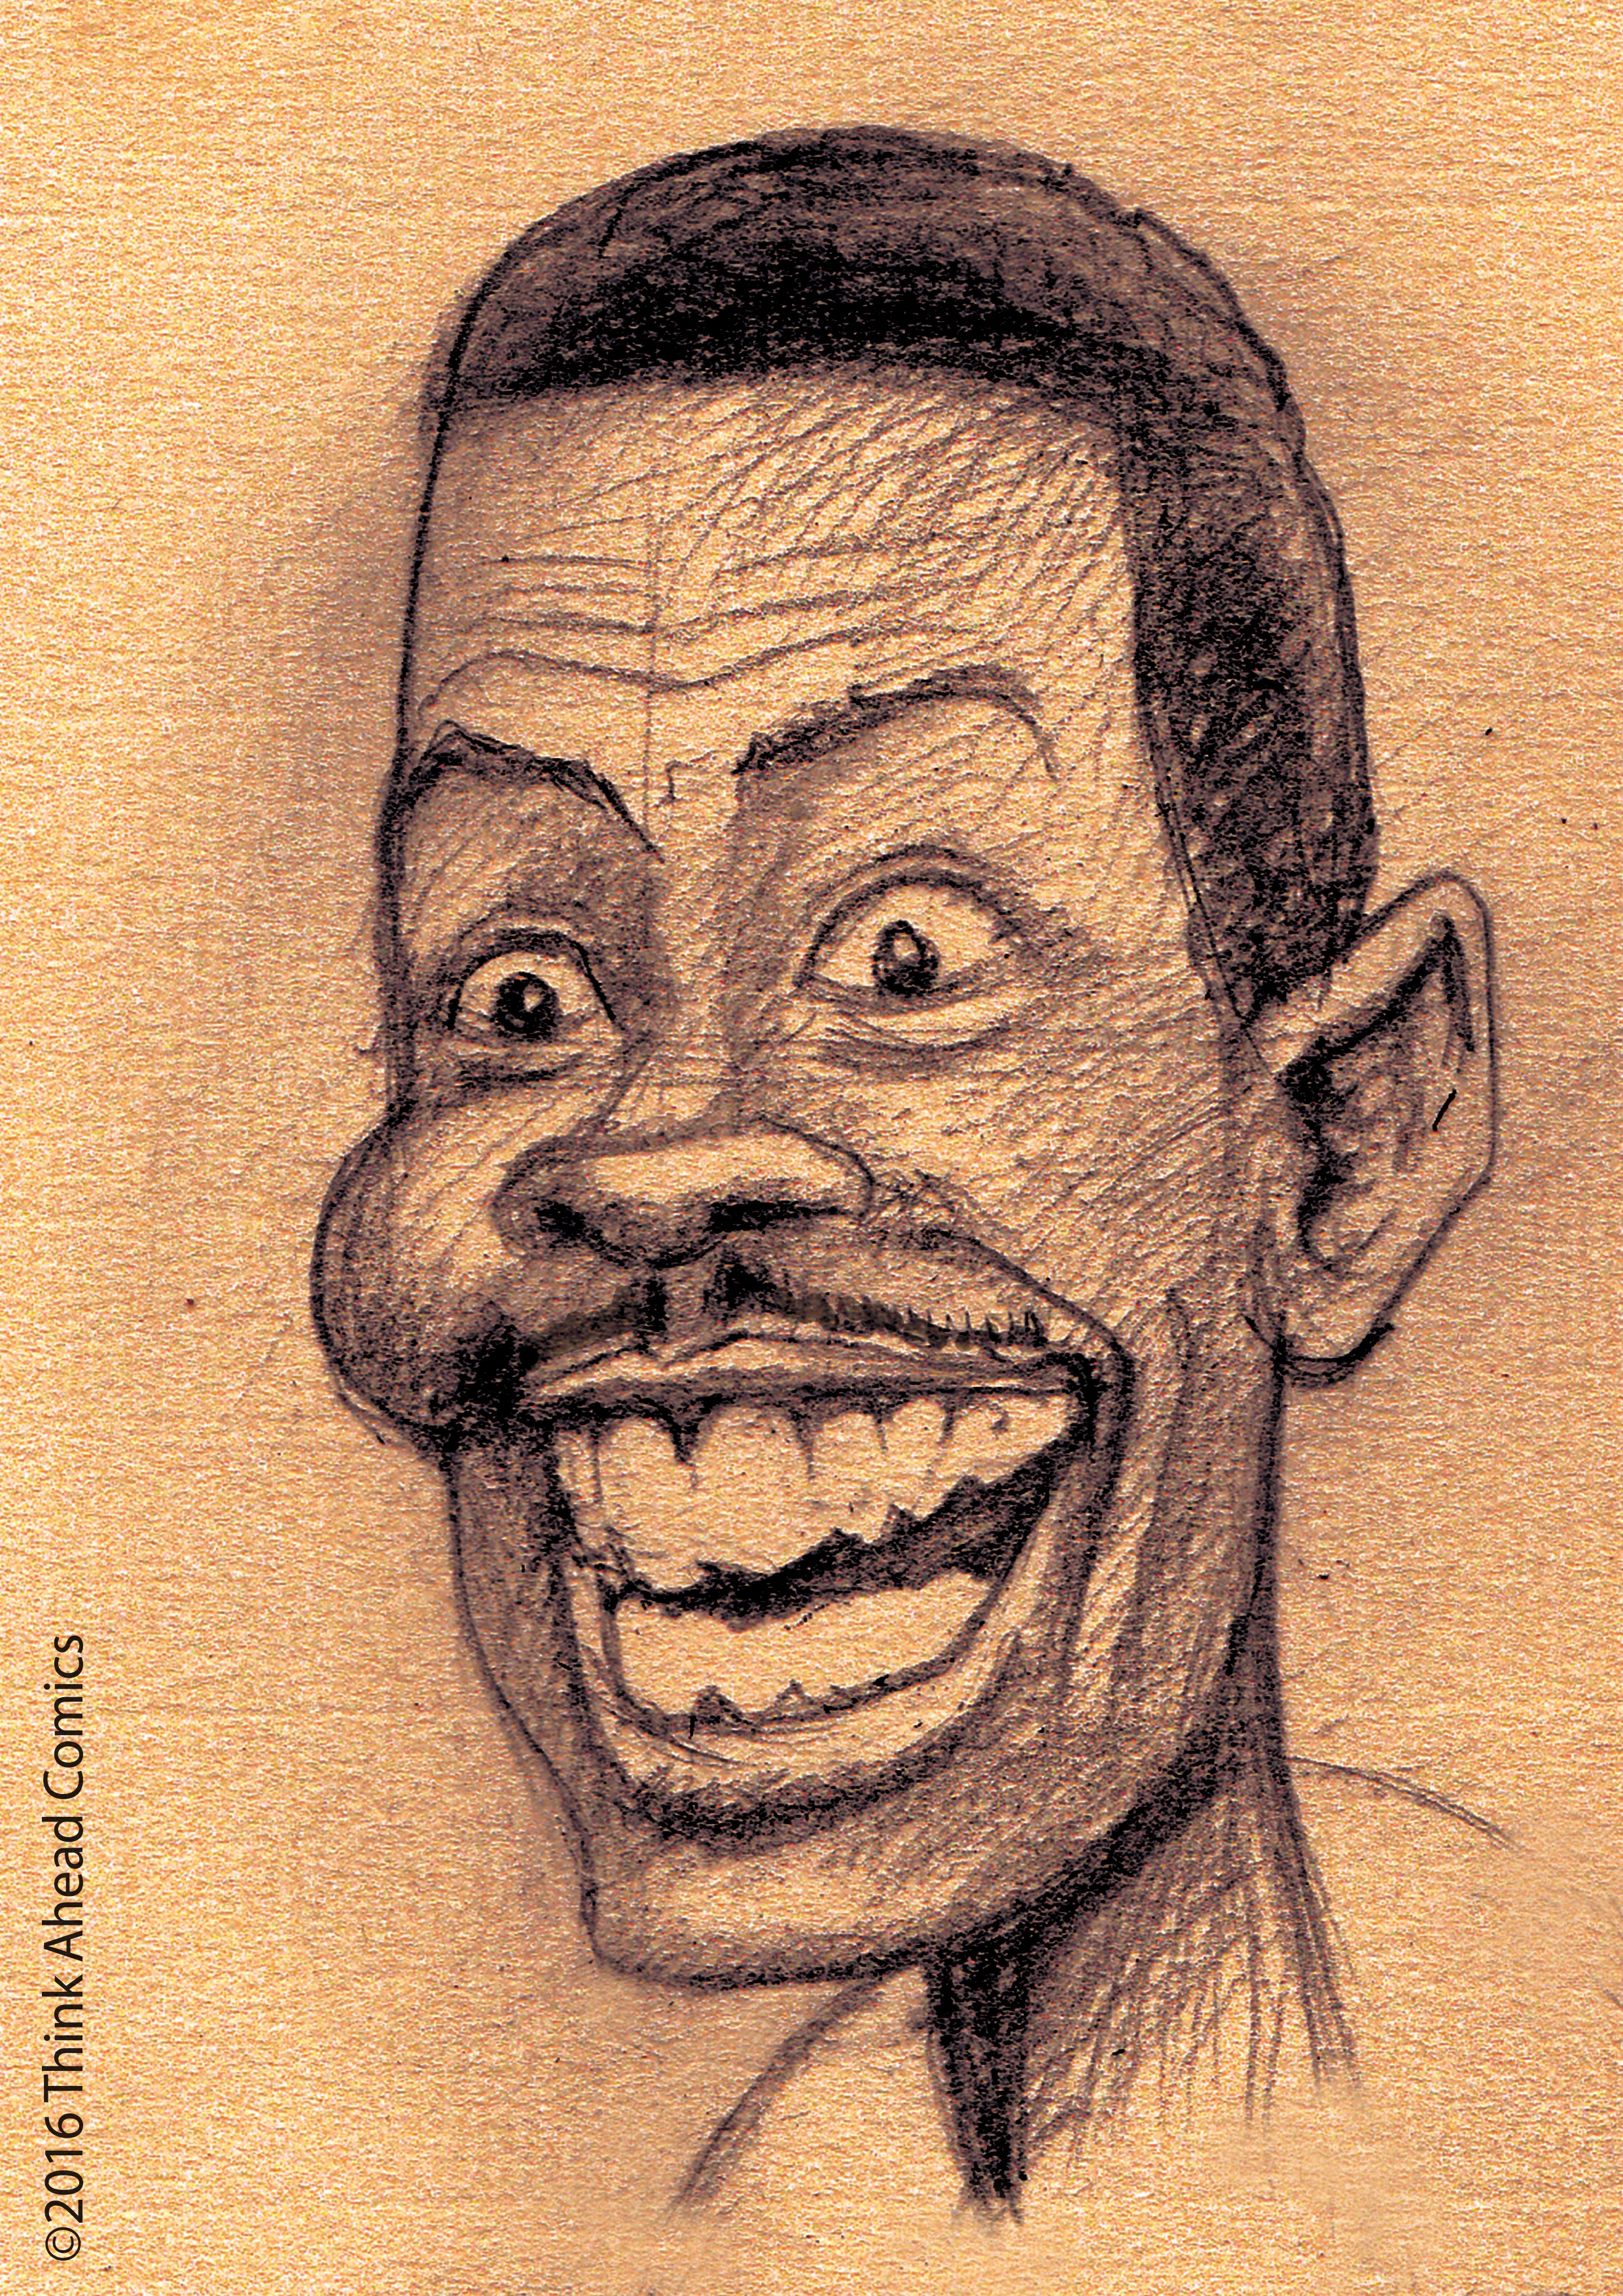 Chris Rock caricature